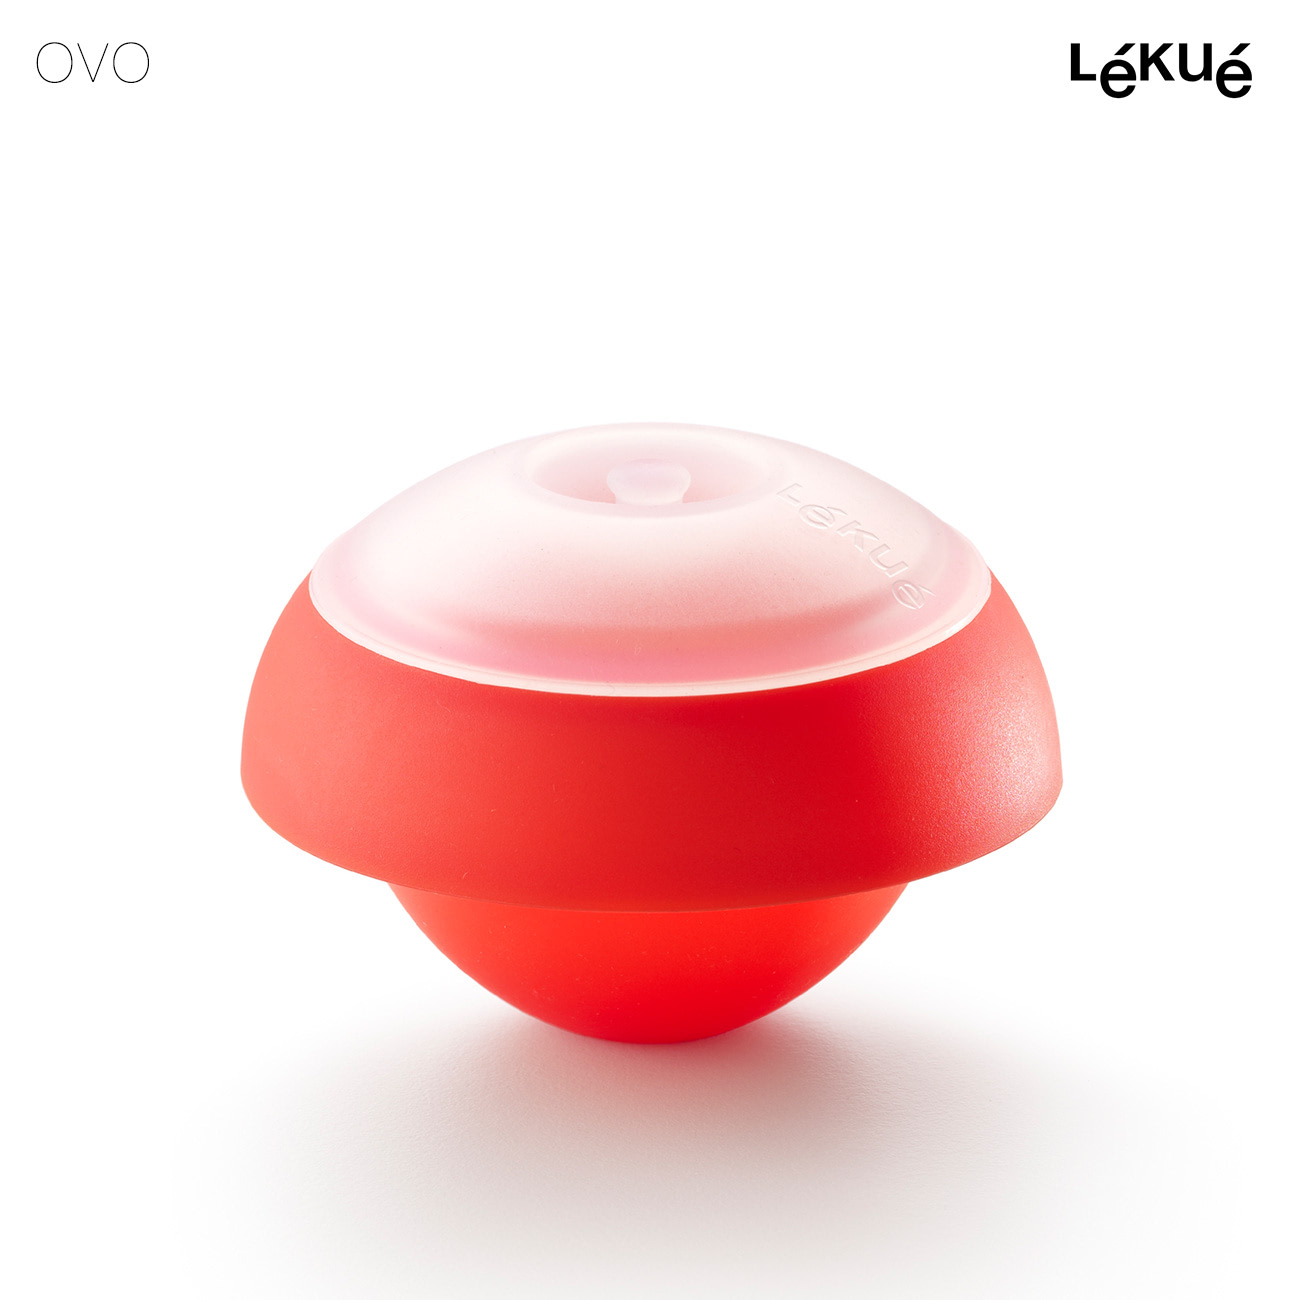 Lekue presents OVO designed by Jordi Pla Studio at Maison&Object. Paris 2011